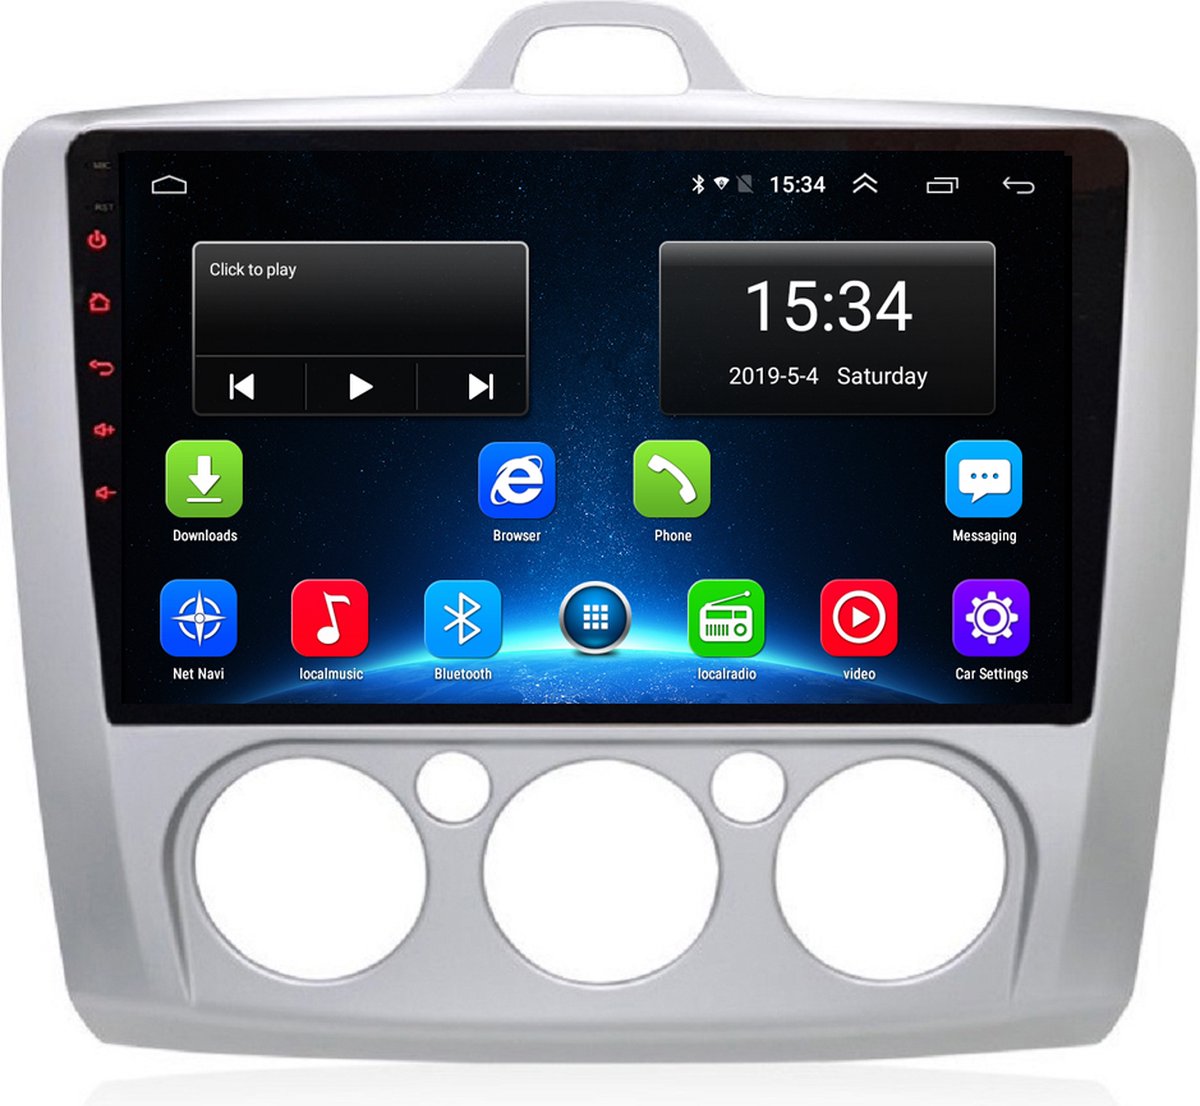 Navigatie radio Ford Focus, Android 8.1 OS, 9 inch scherm, GPS, Wifi, Mirror link, DAB+, B - Merkloos